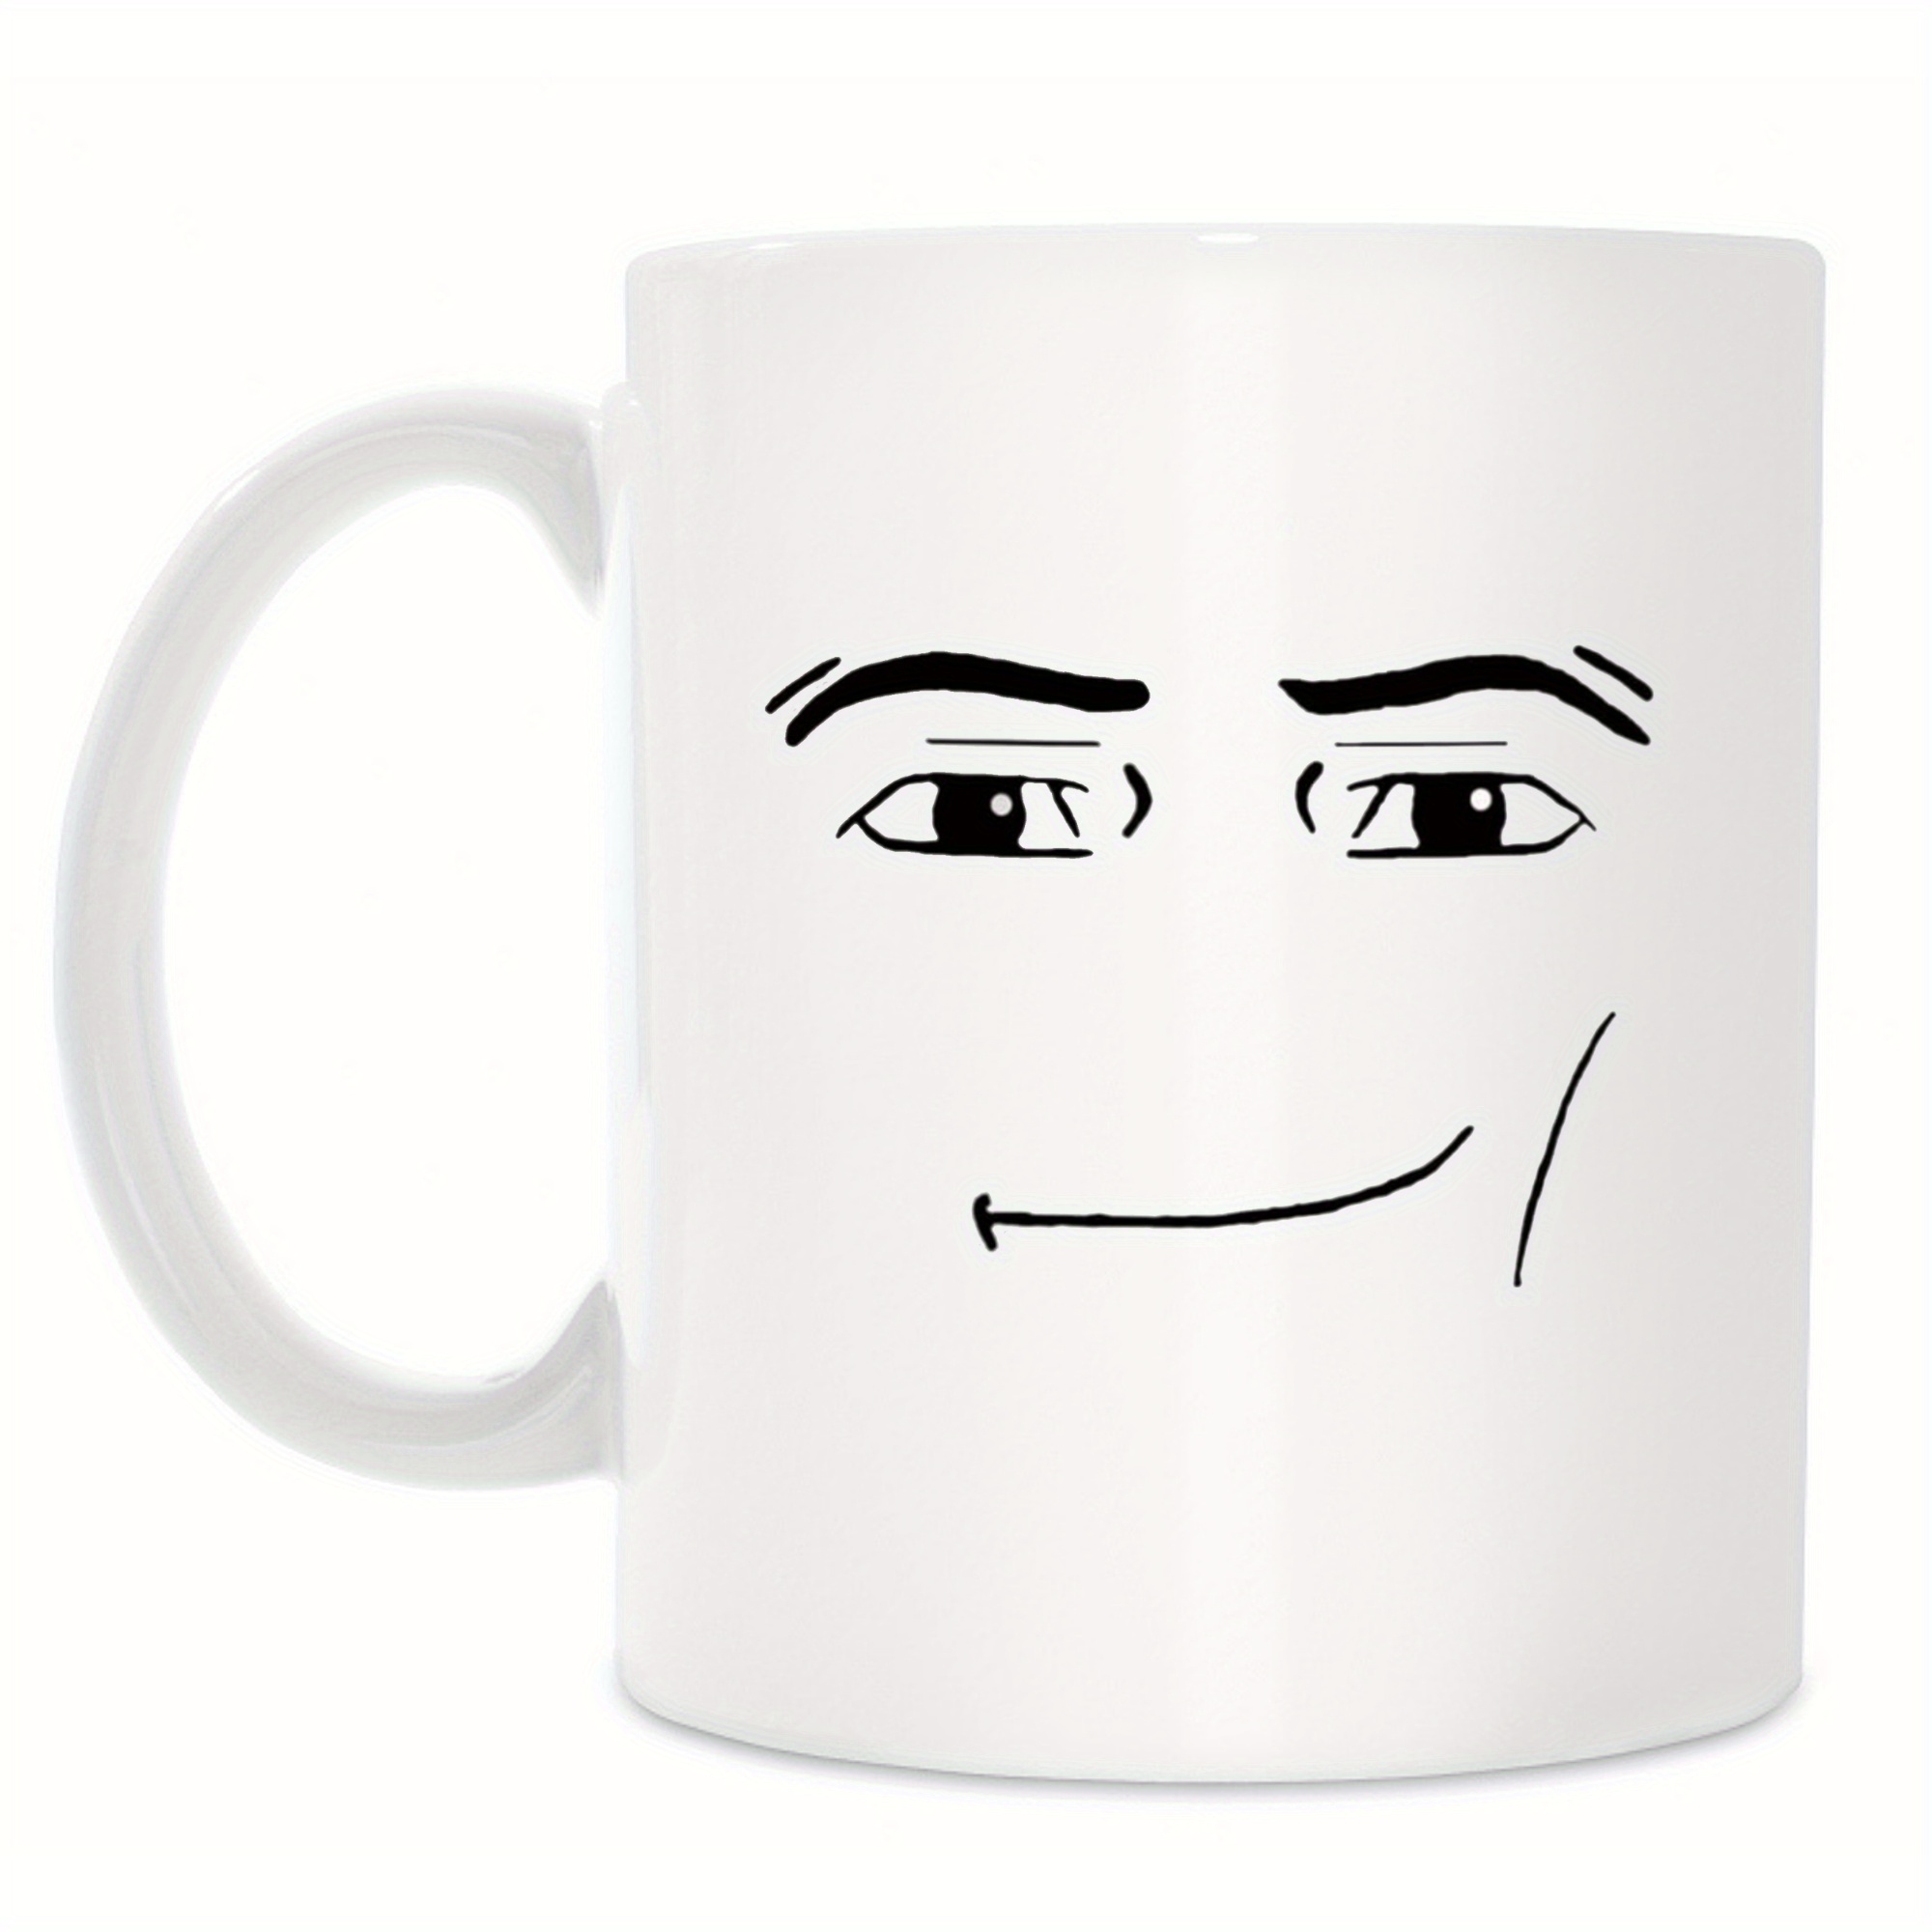 Funny Coffee Cups Wake Up Drink Coffee Mugs for Men Fun Birthday